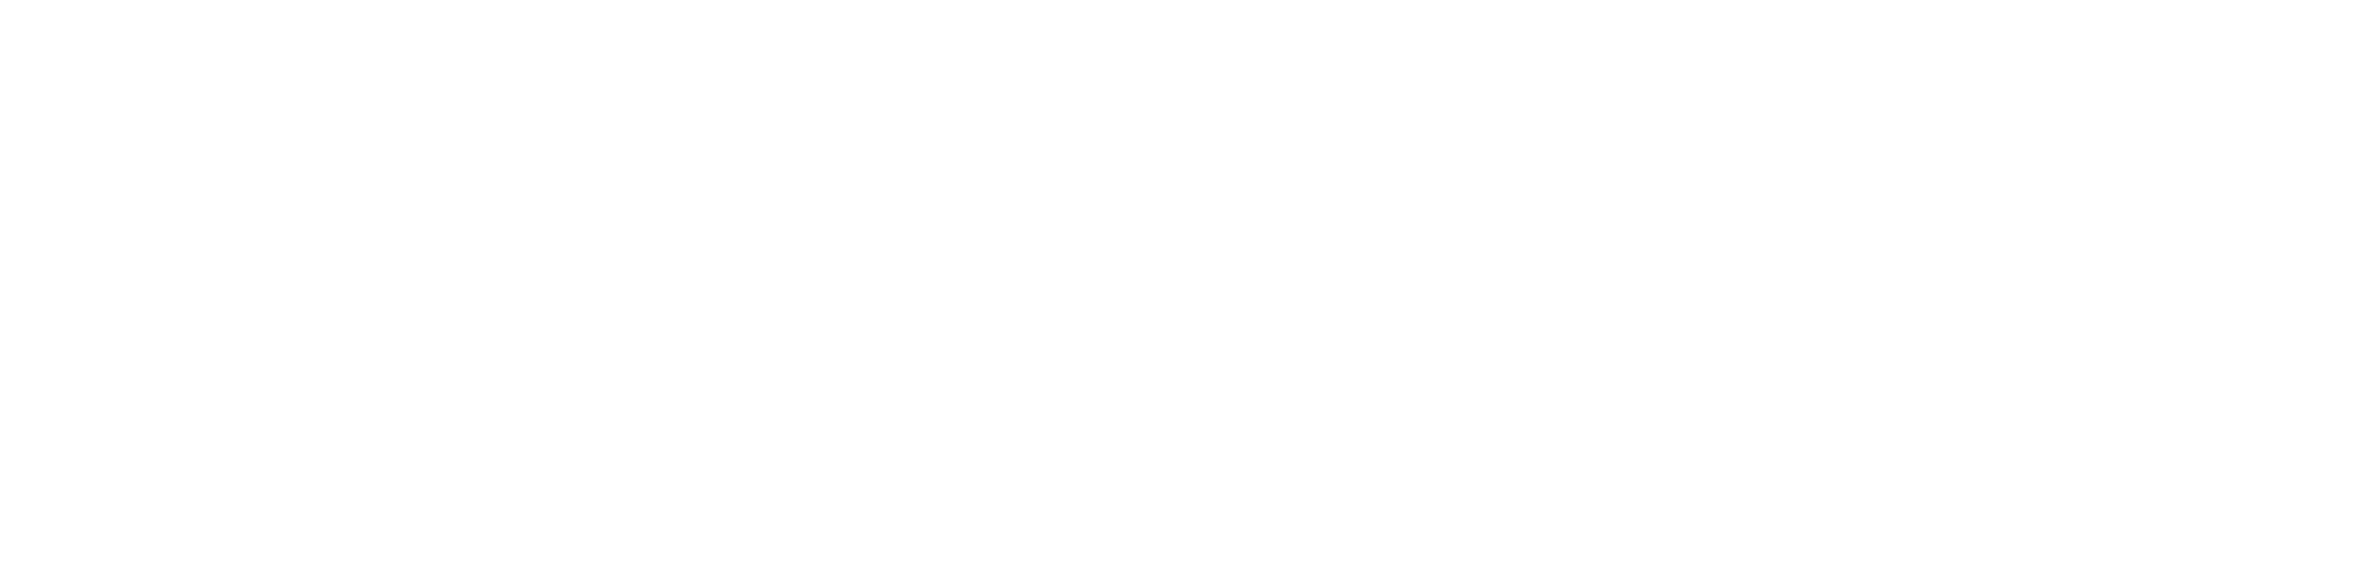 Asseco-PST-logo-white